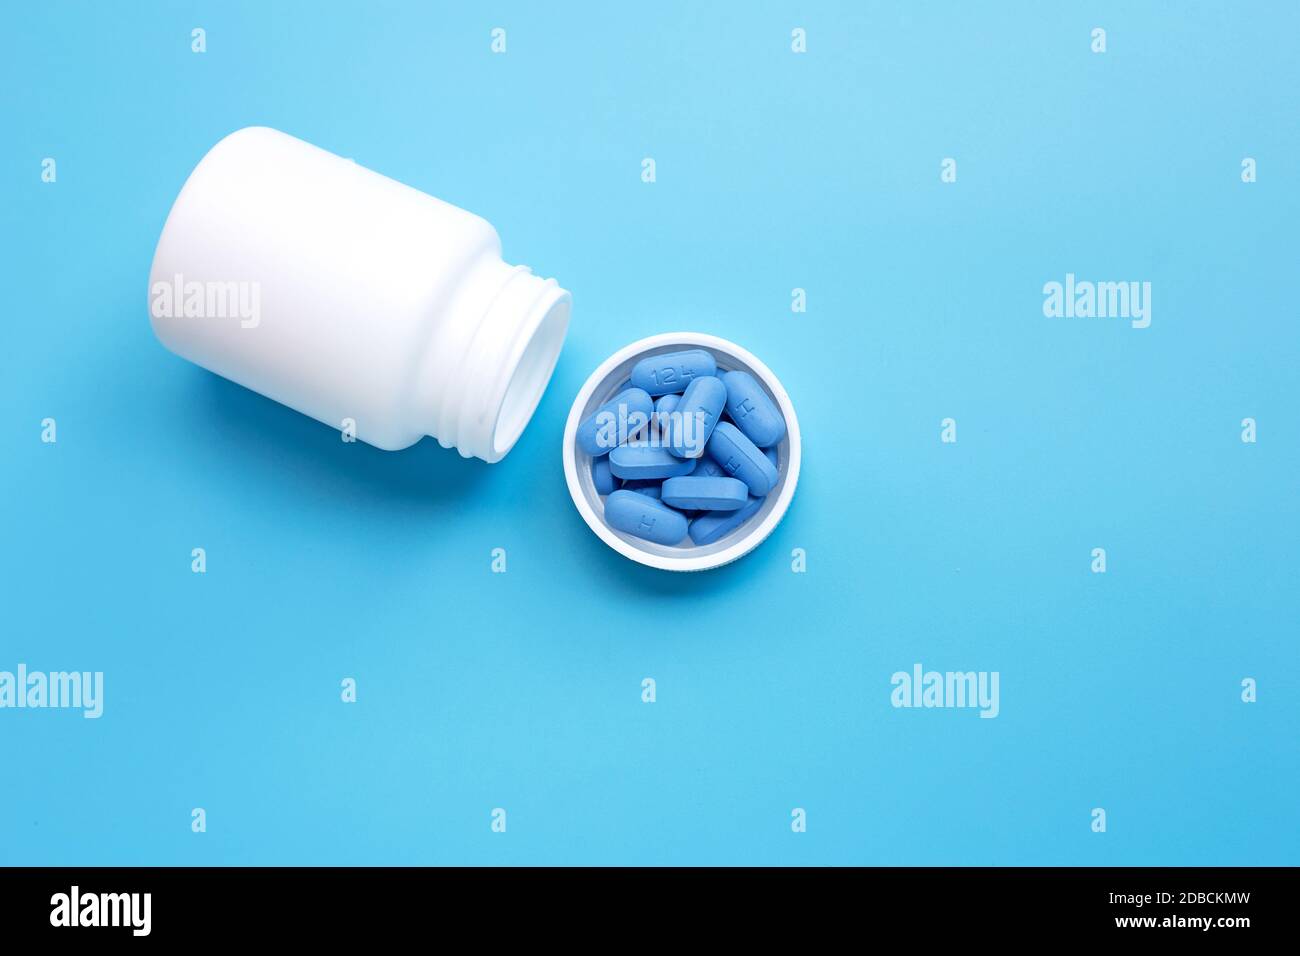 https://c8.alamy.com/comp/2DBCKMW/prep-pre-exposure-prophylaxis-used-to-prevent-hiv-in-plastic-pill-bottle-cap-on-blue-background-copy-space-2DBCKMW.jpg